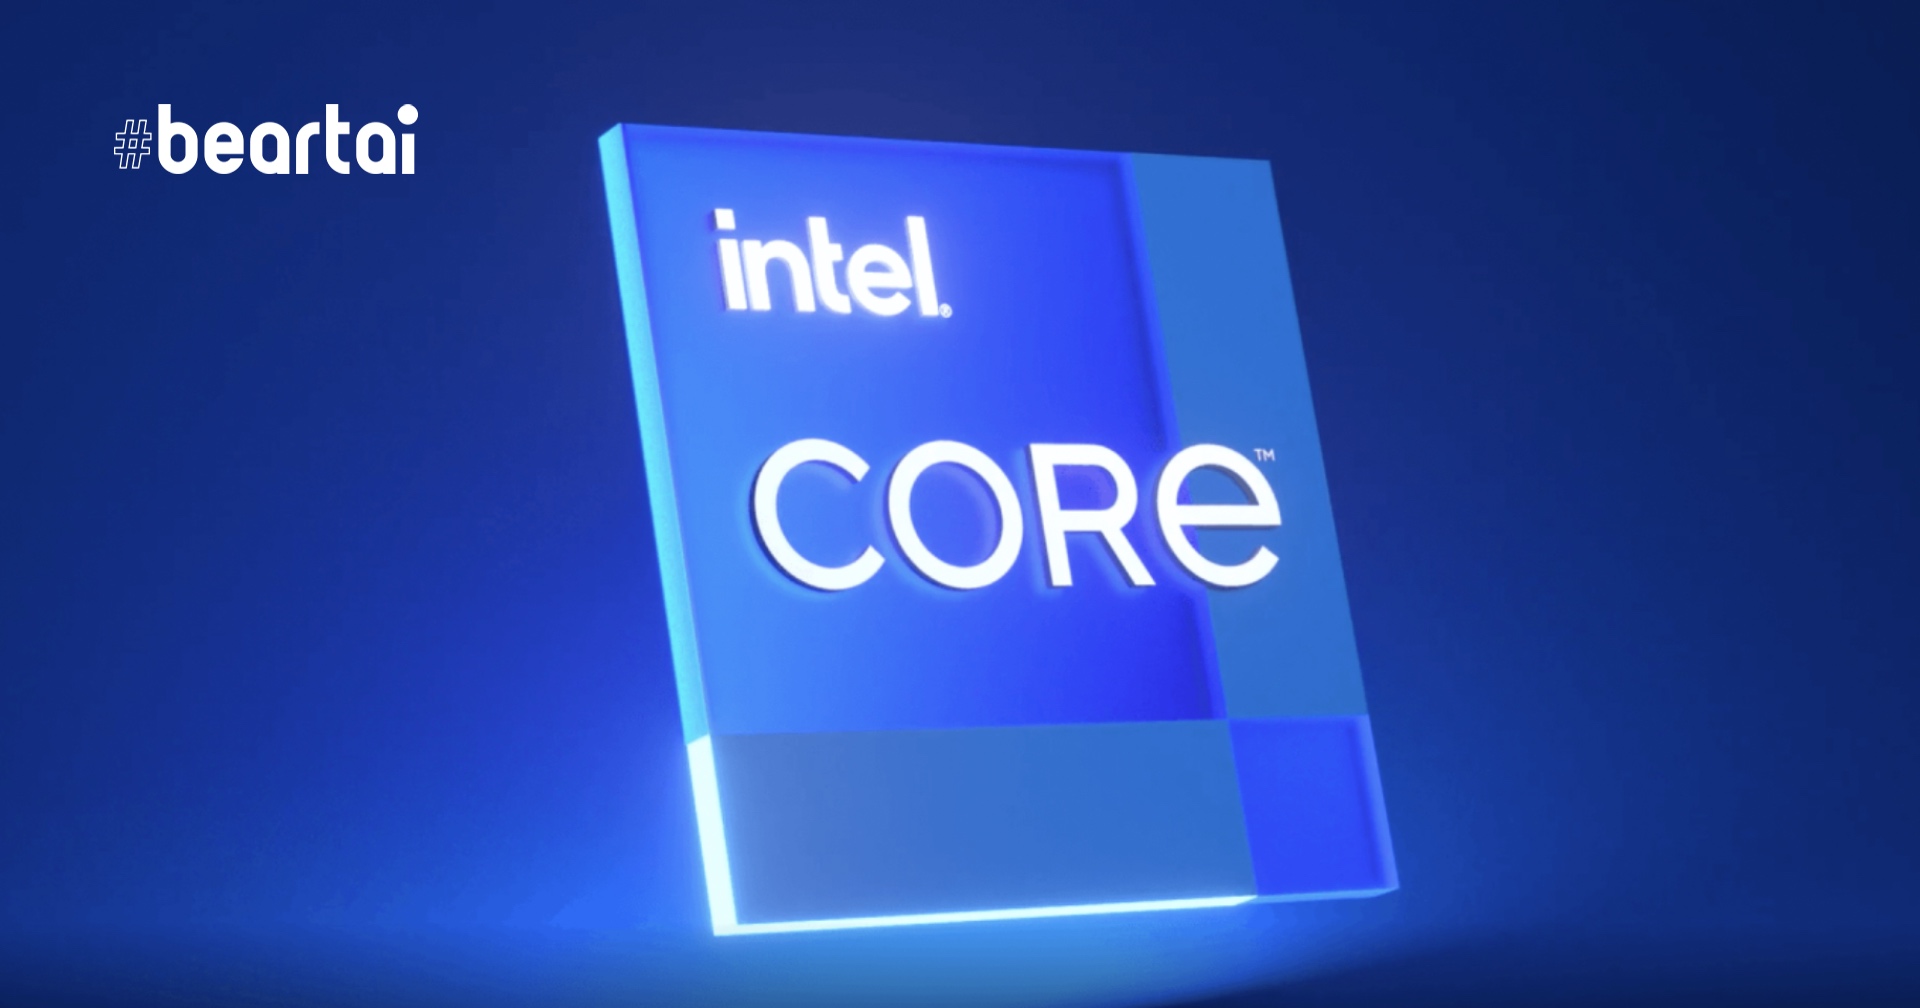 Intel ถูกกดดันให้ทำอะไรสักอย่างหลังโดน Apple Silicon และ AMD แซงหน้า